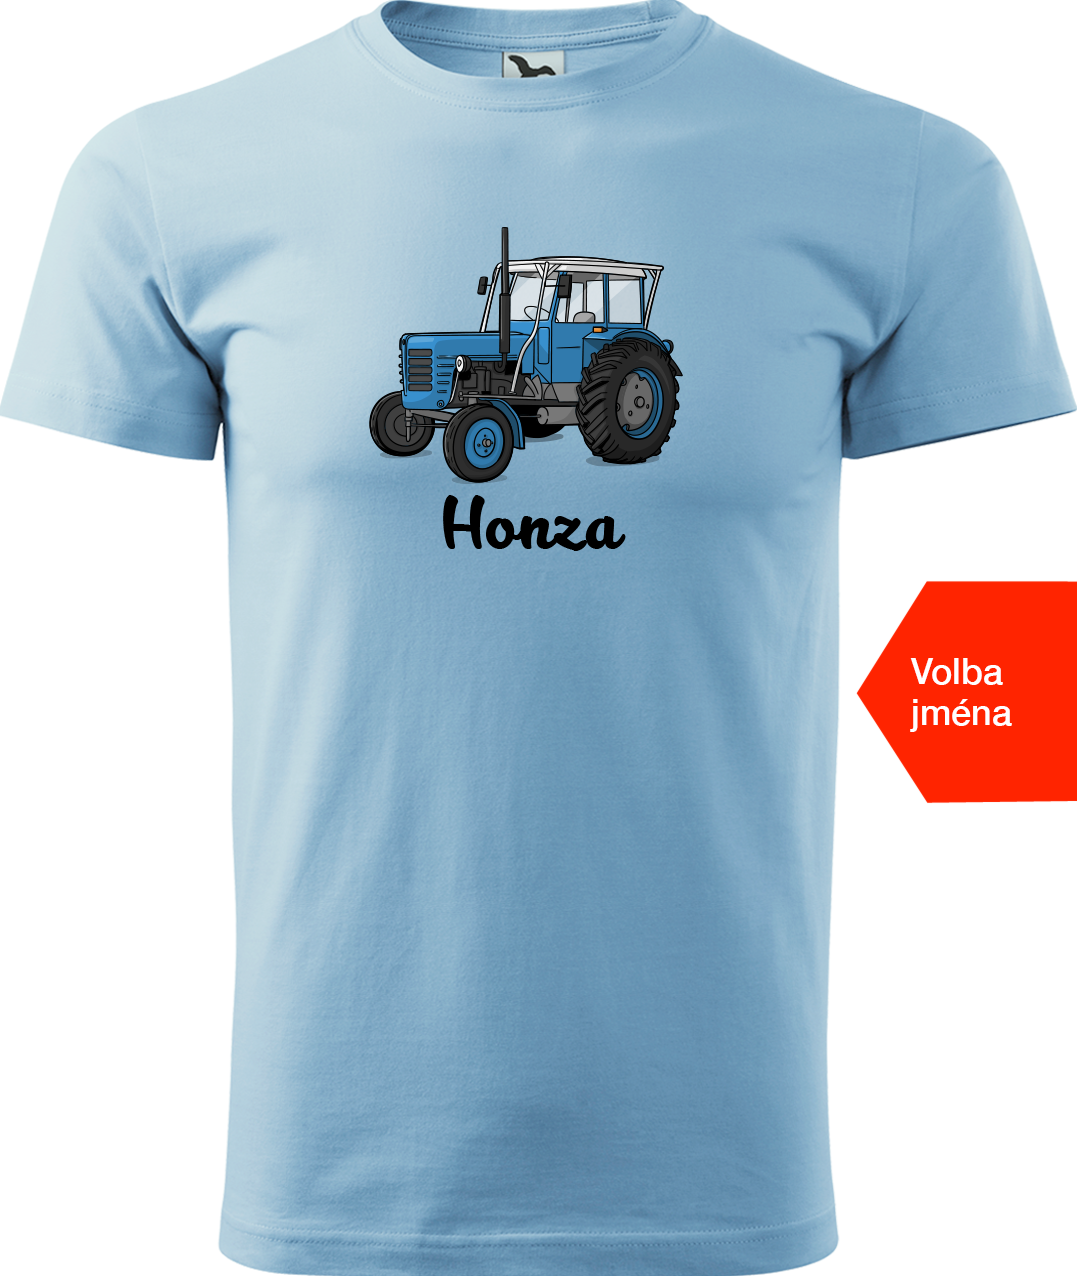 Tričko s traktorem a jménem - Starý traktor Velikost: S, Barva: Nebesky modrá (15)